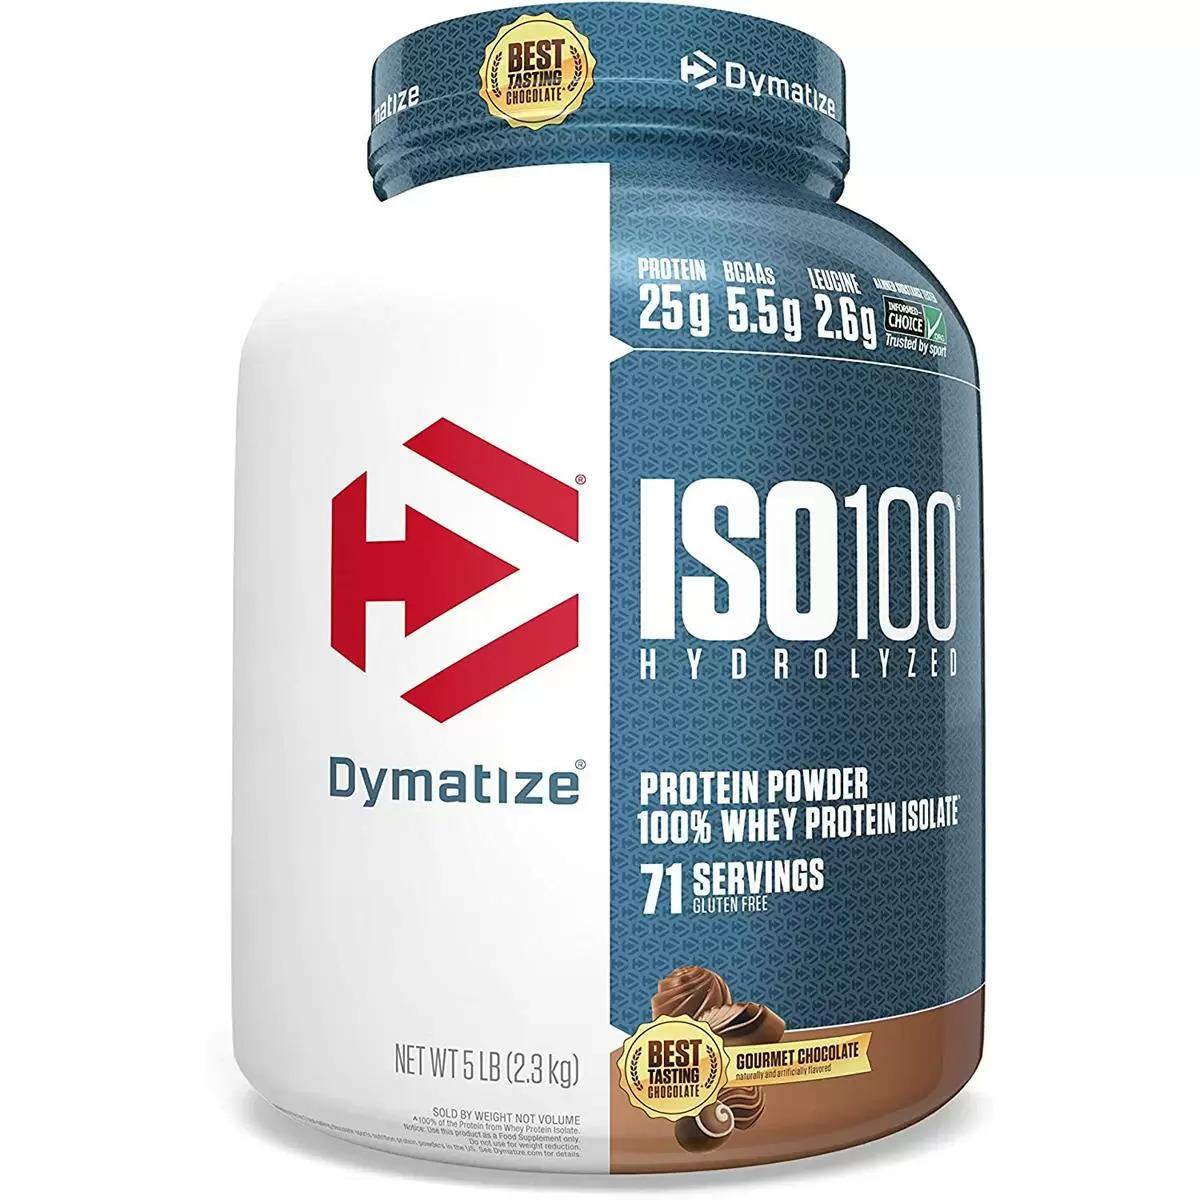 Dymatize ISO100 Hydrolyzed Protein Powder 5lbs for $55.95 Shipped